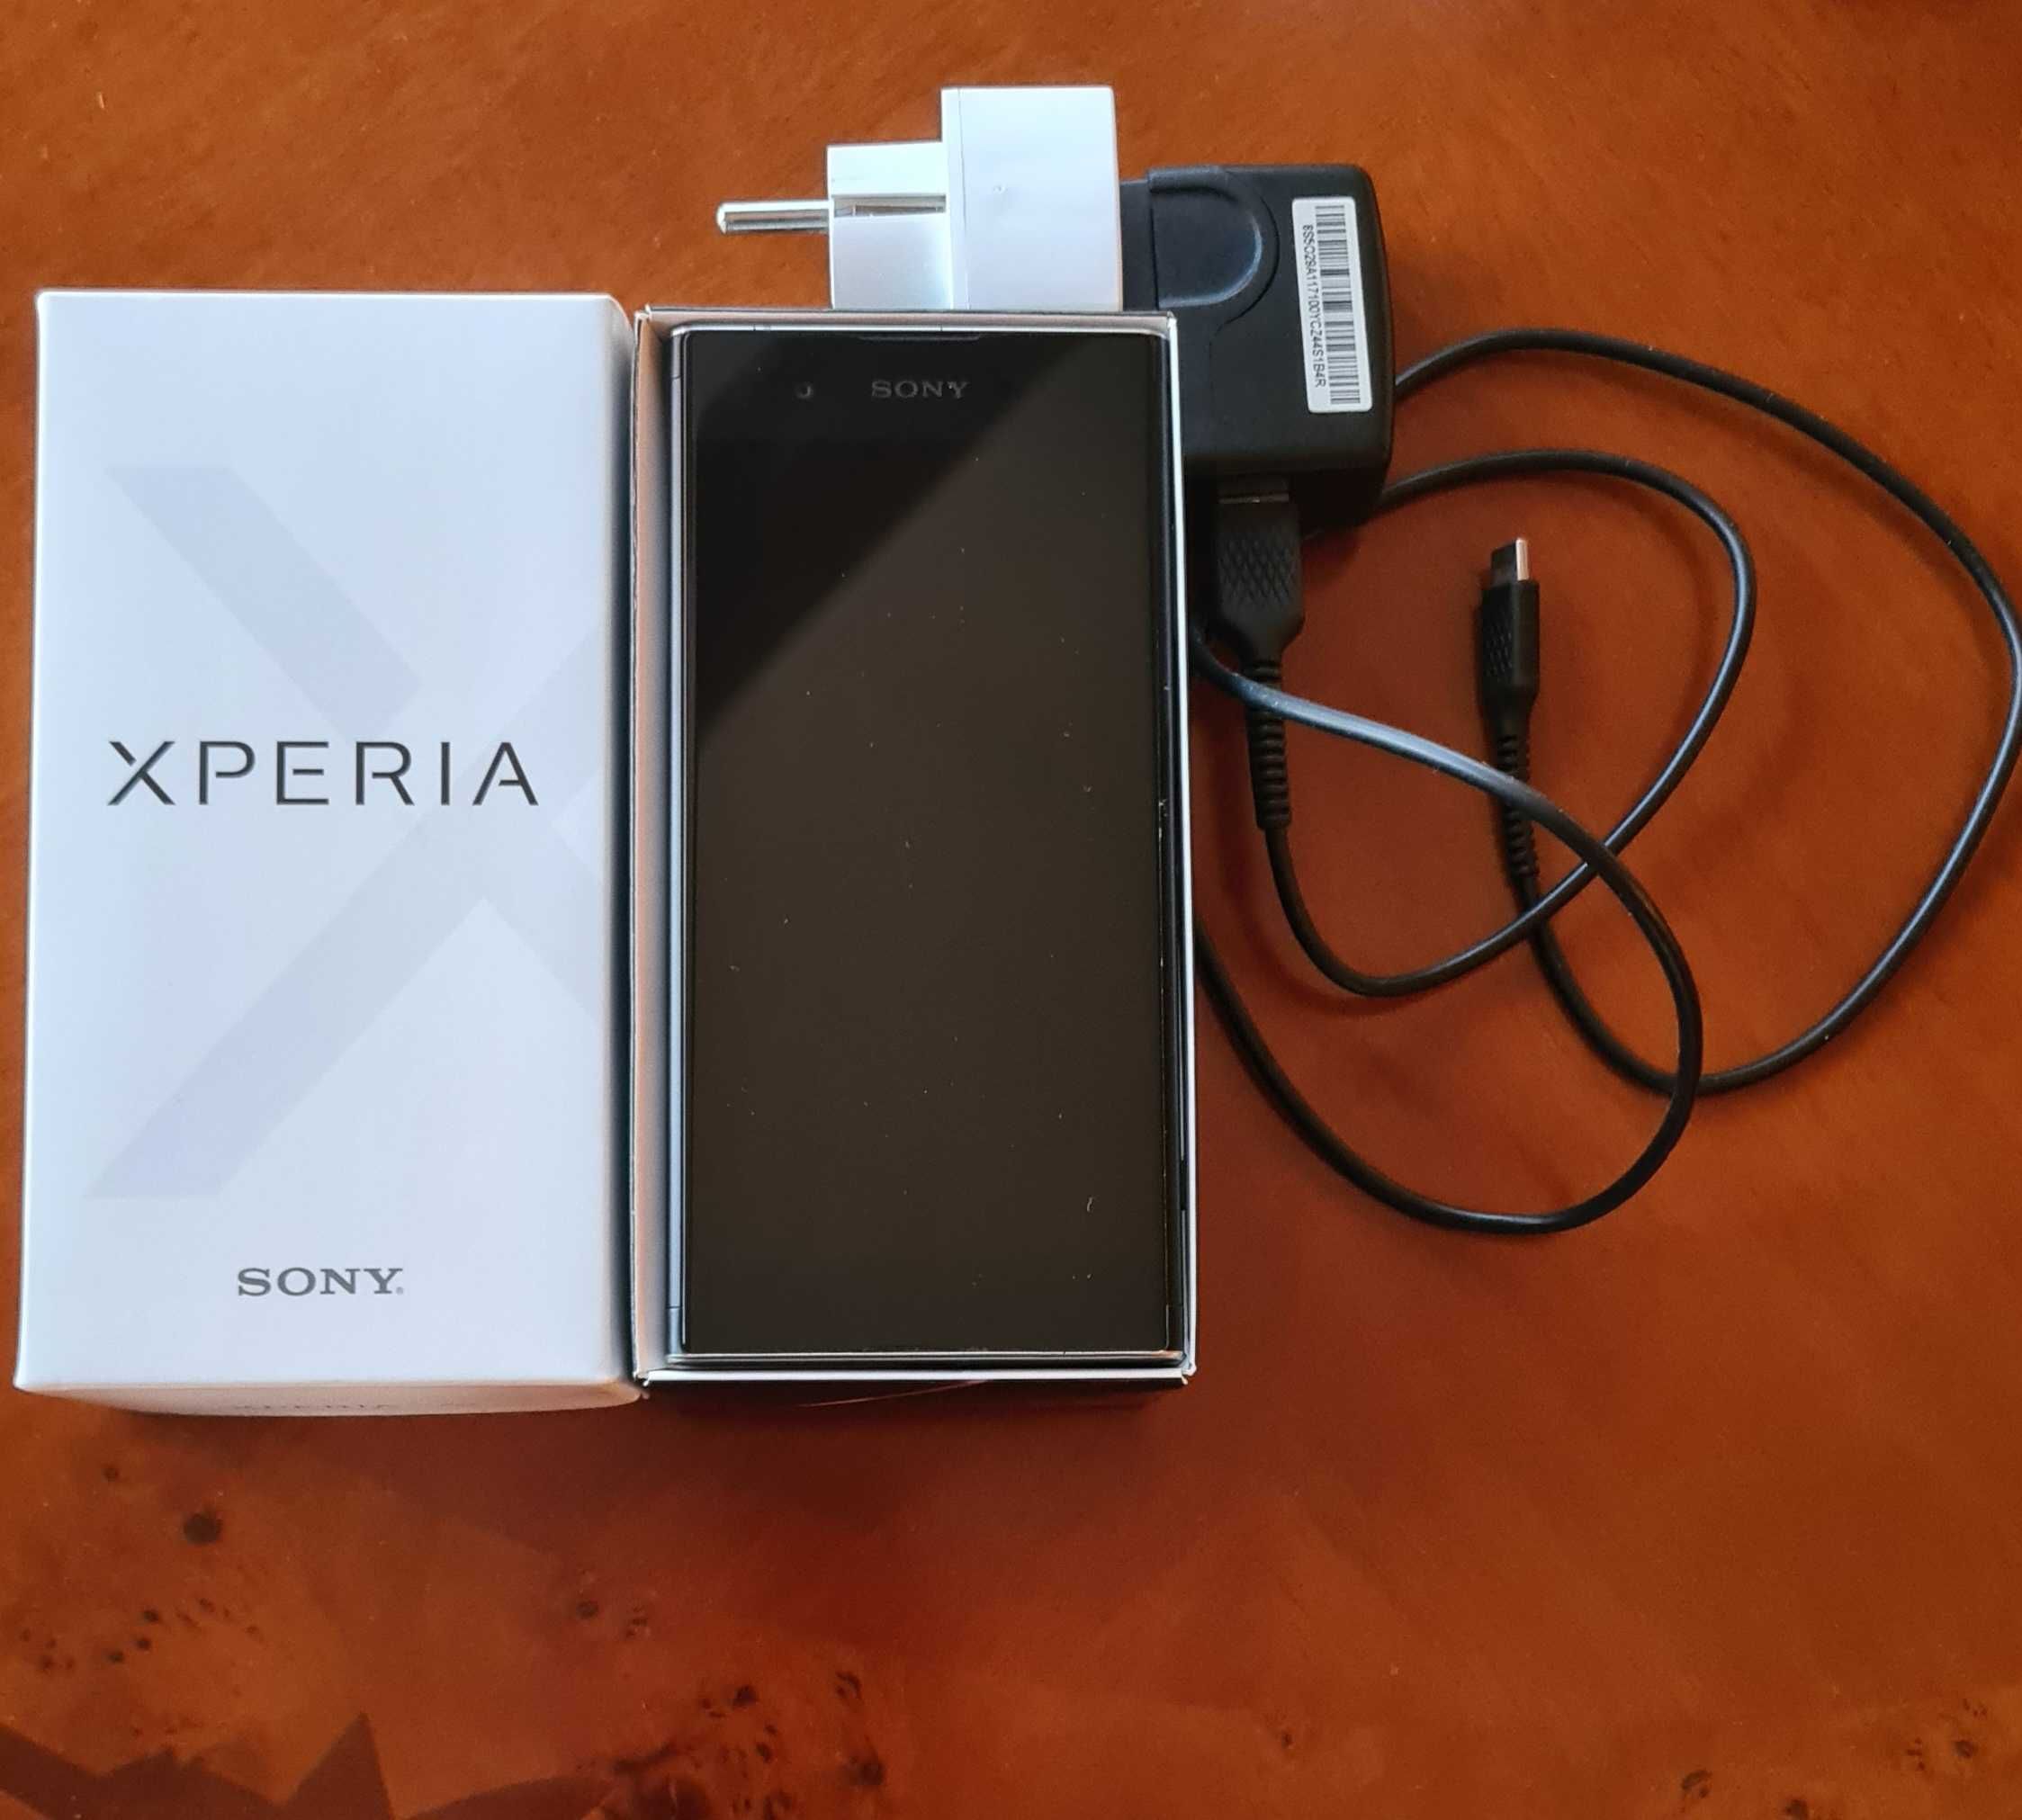 Sony Xperia XA1 Plus + microSD 32 Gb